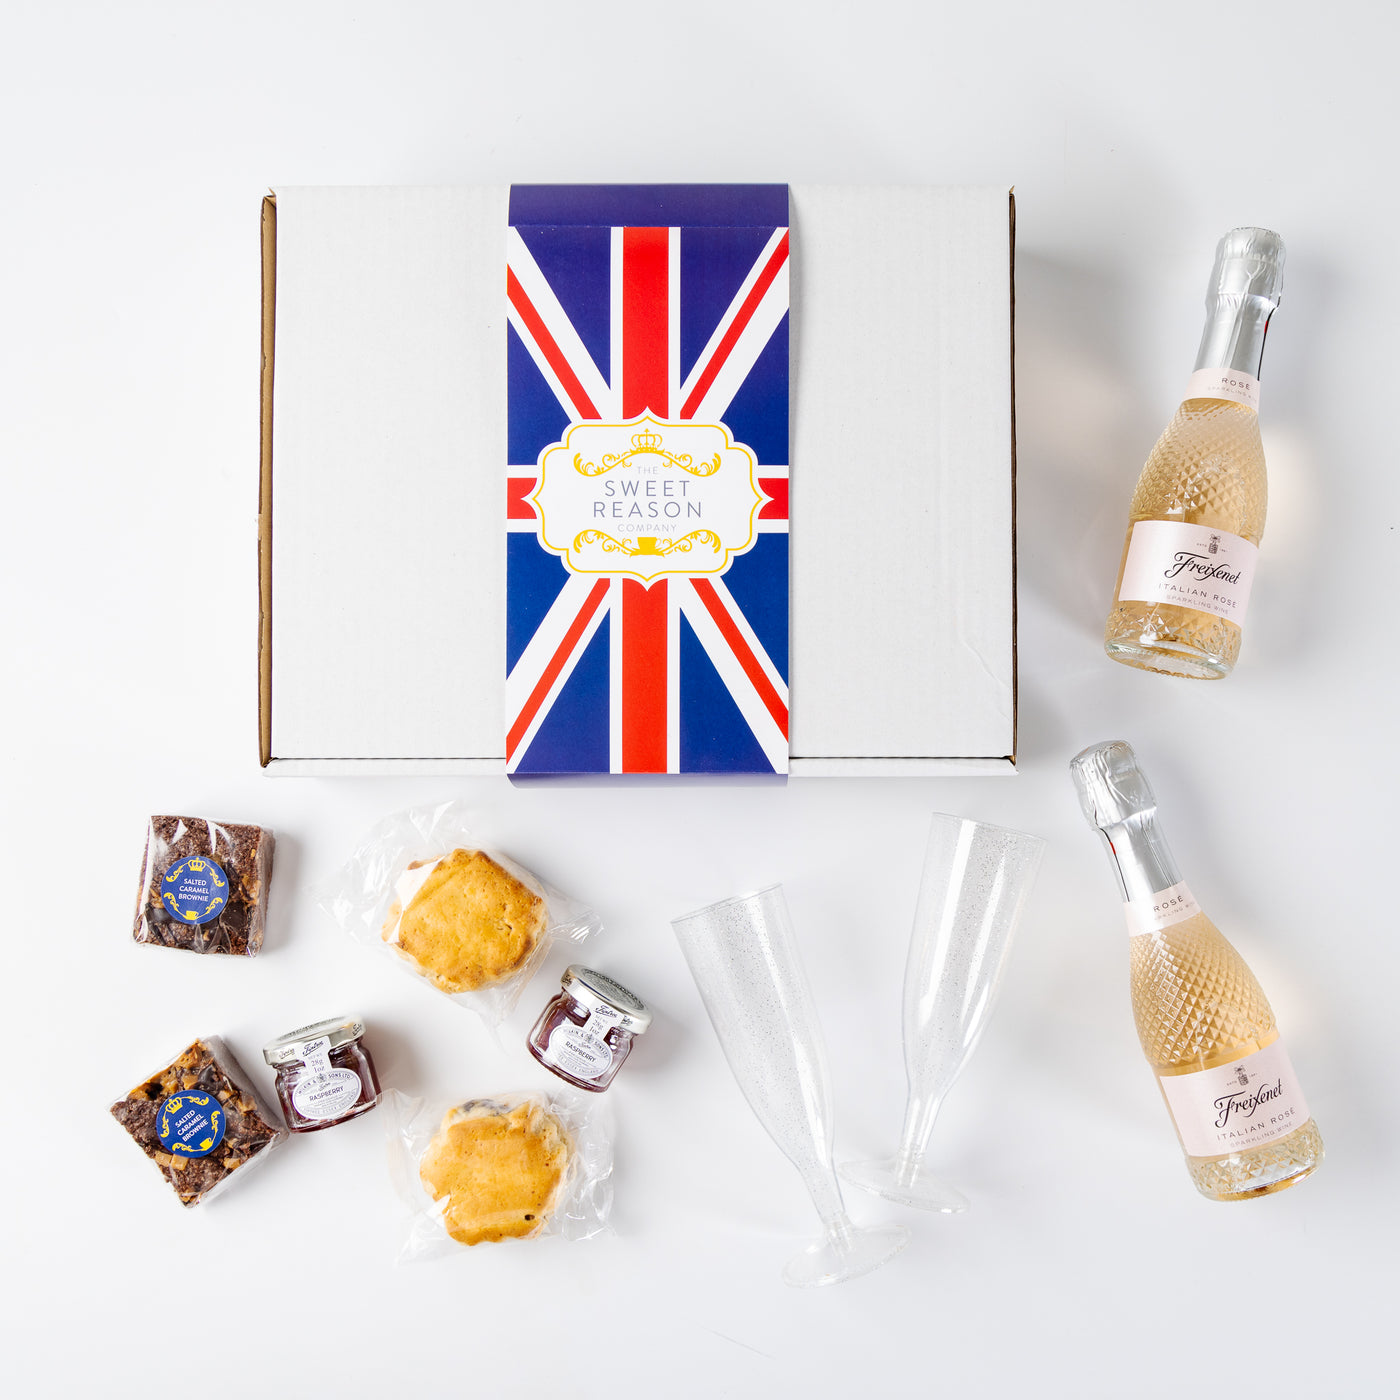 'British' Brownies, Scones, Jam and Sparkling Wine